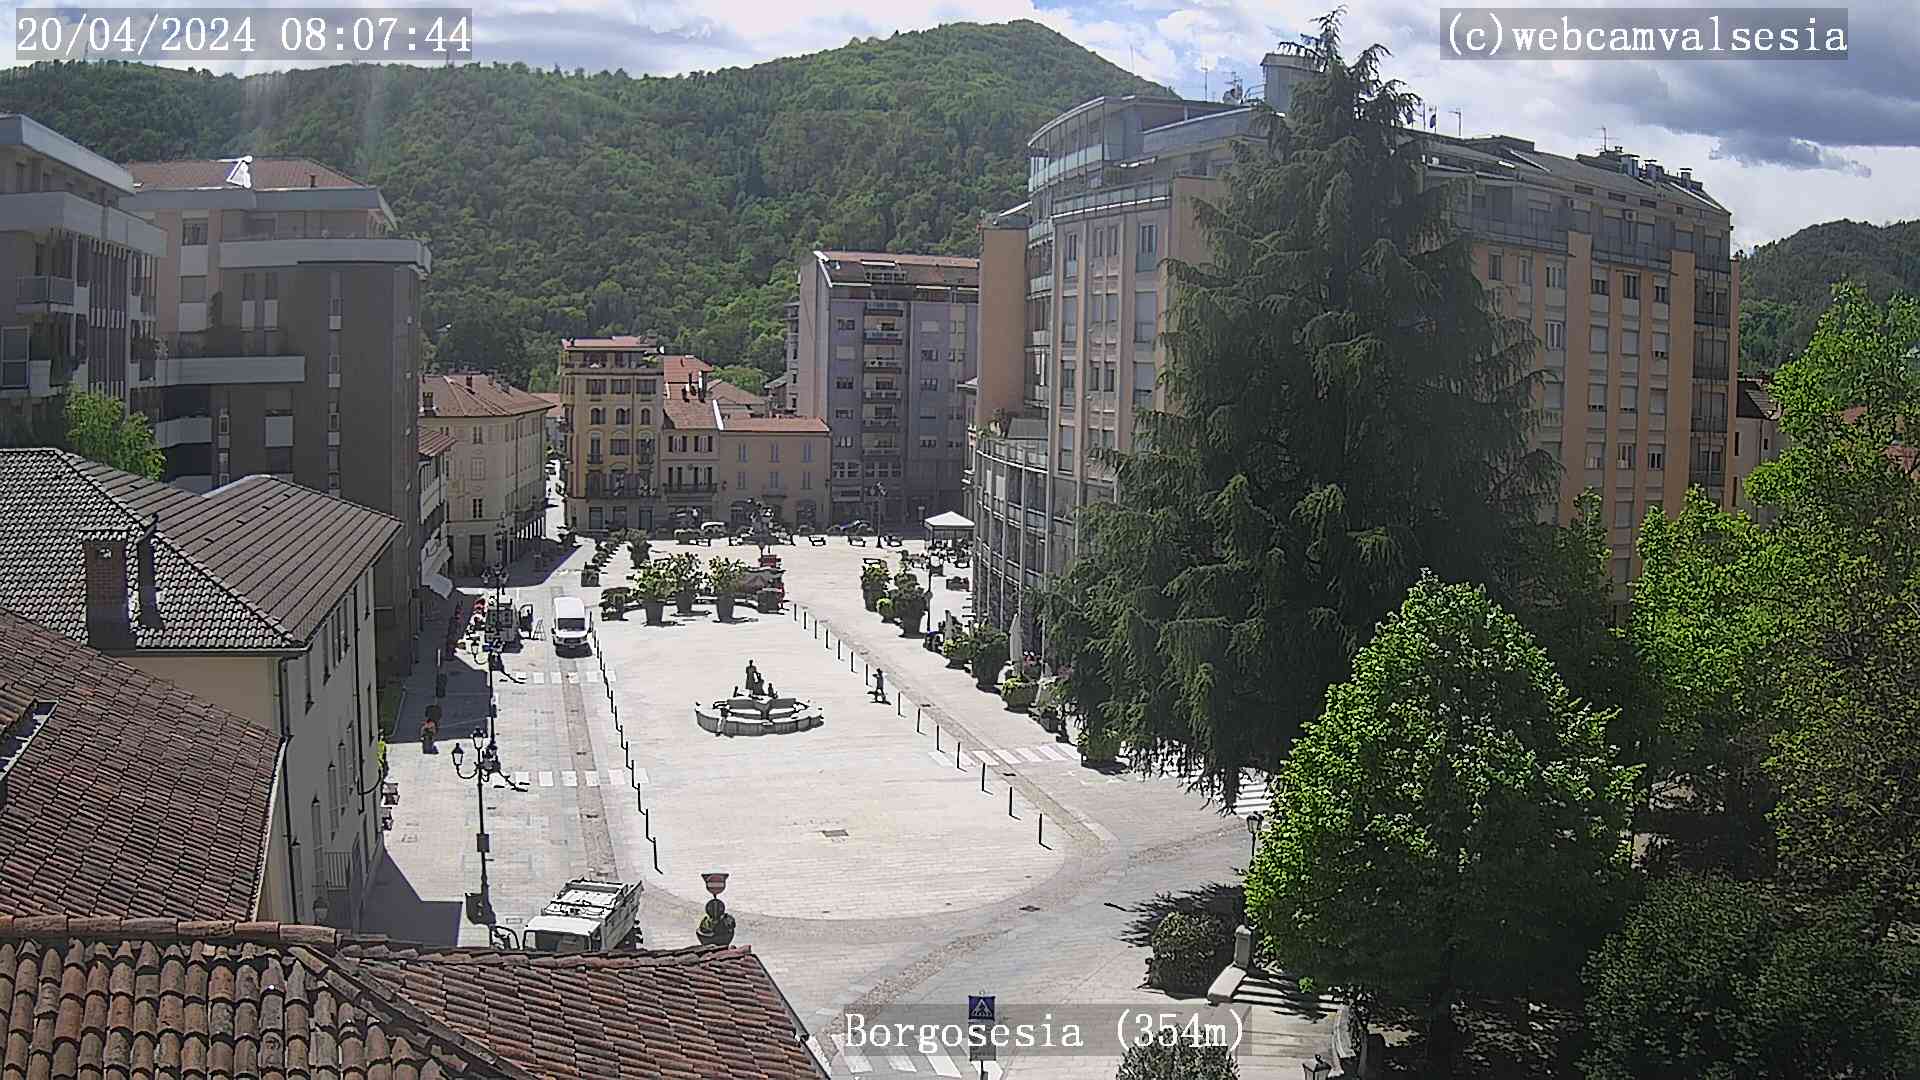 Webcam Valsesia-Borgosesia